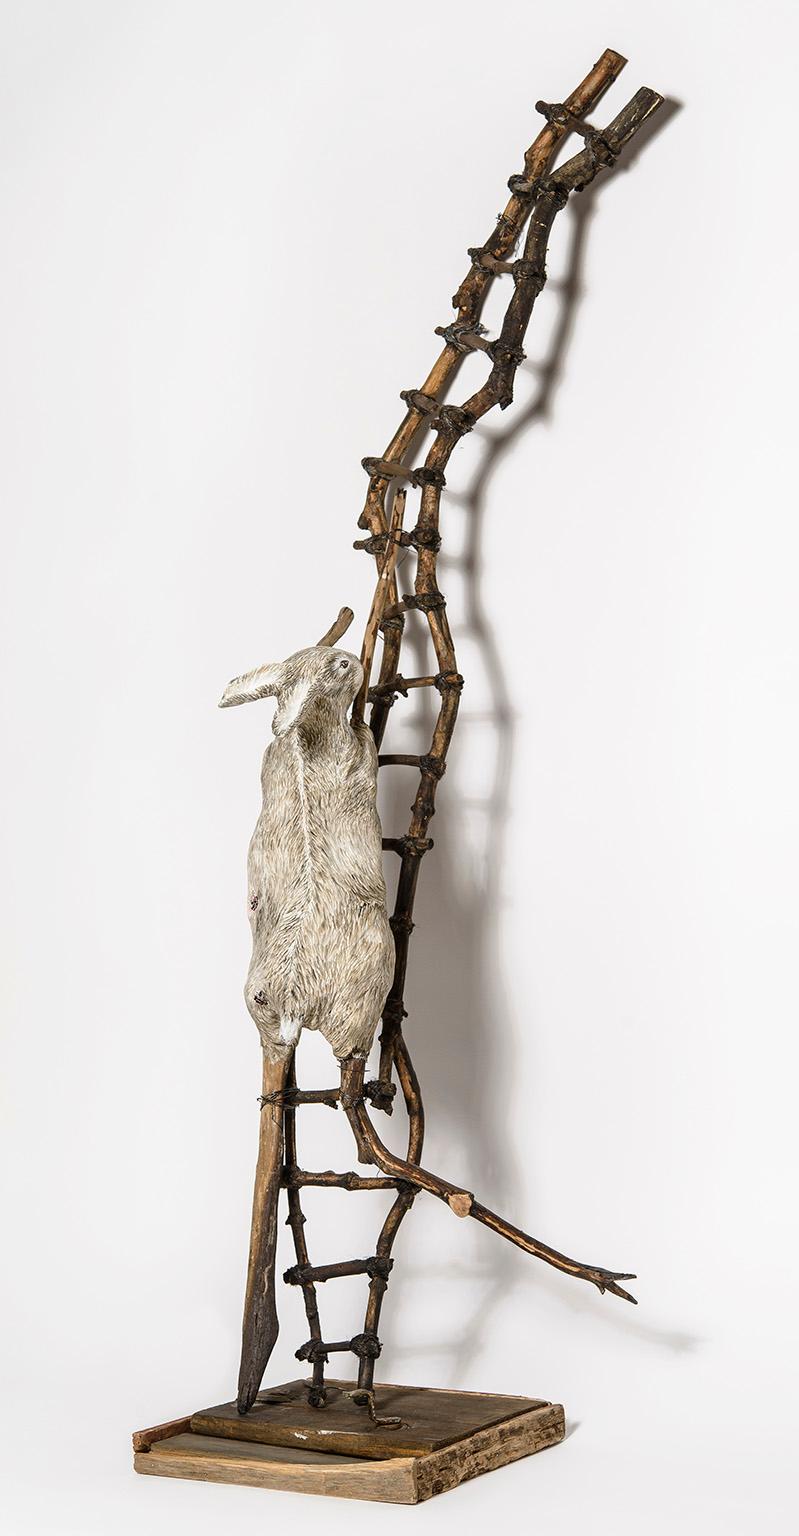 Sculpture of Rabbit crawling up wood ladder: 'Talking about Hard Things' - Mixed Media Art by Elizabeth Jordan